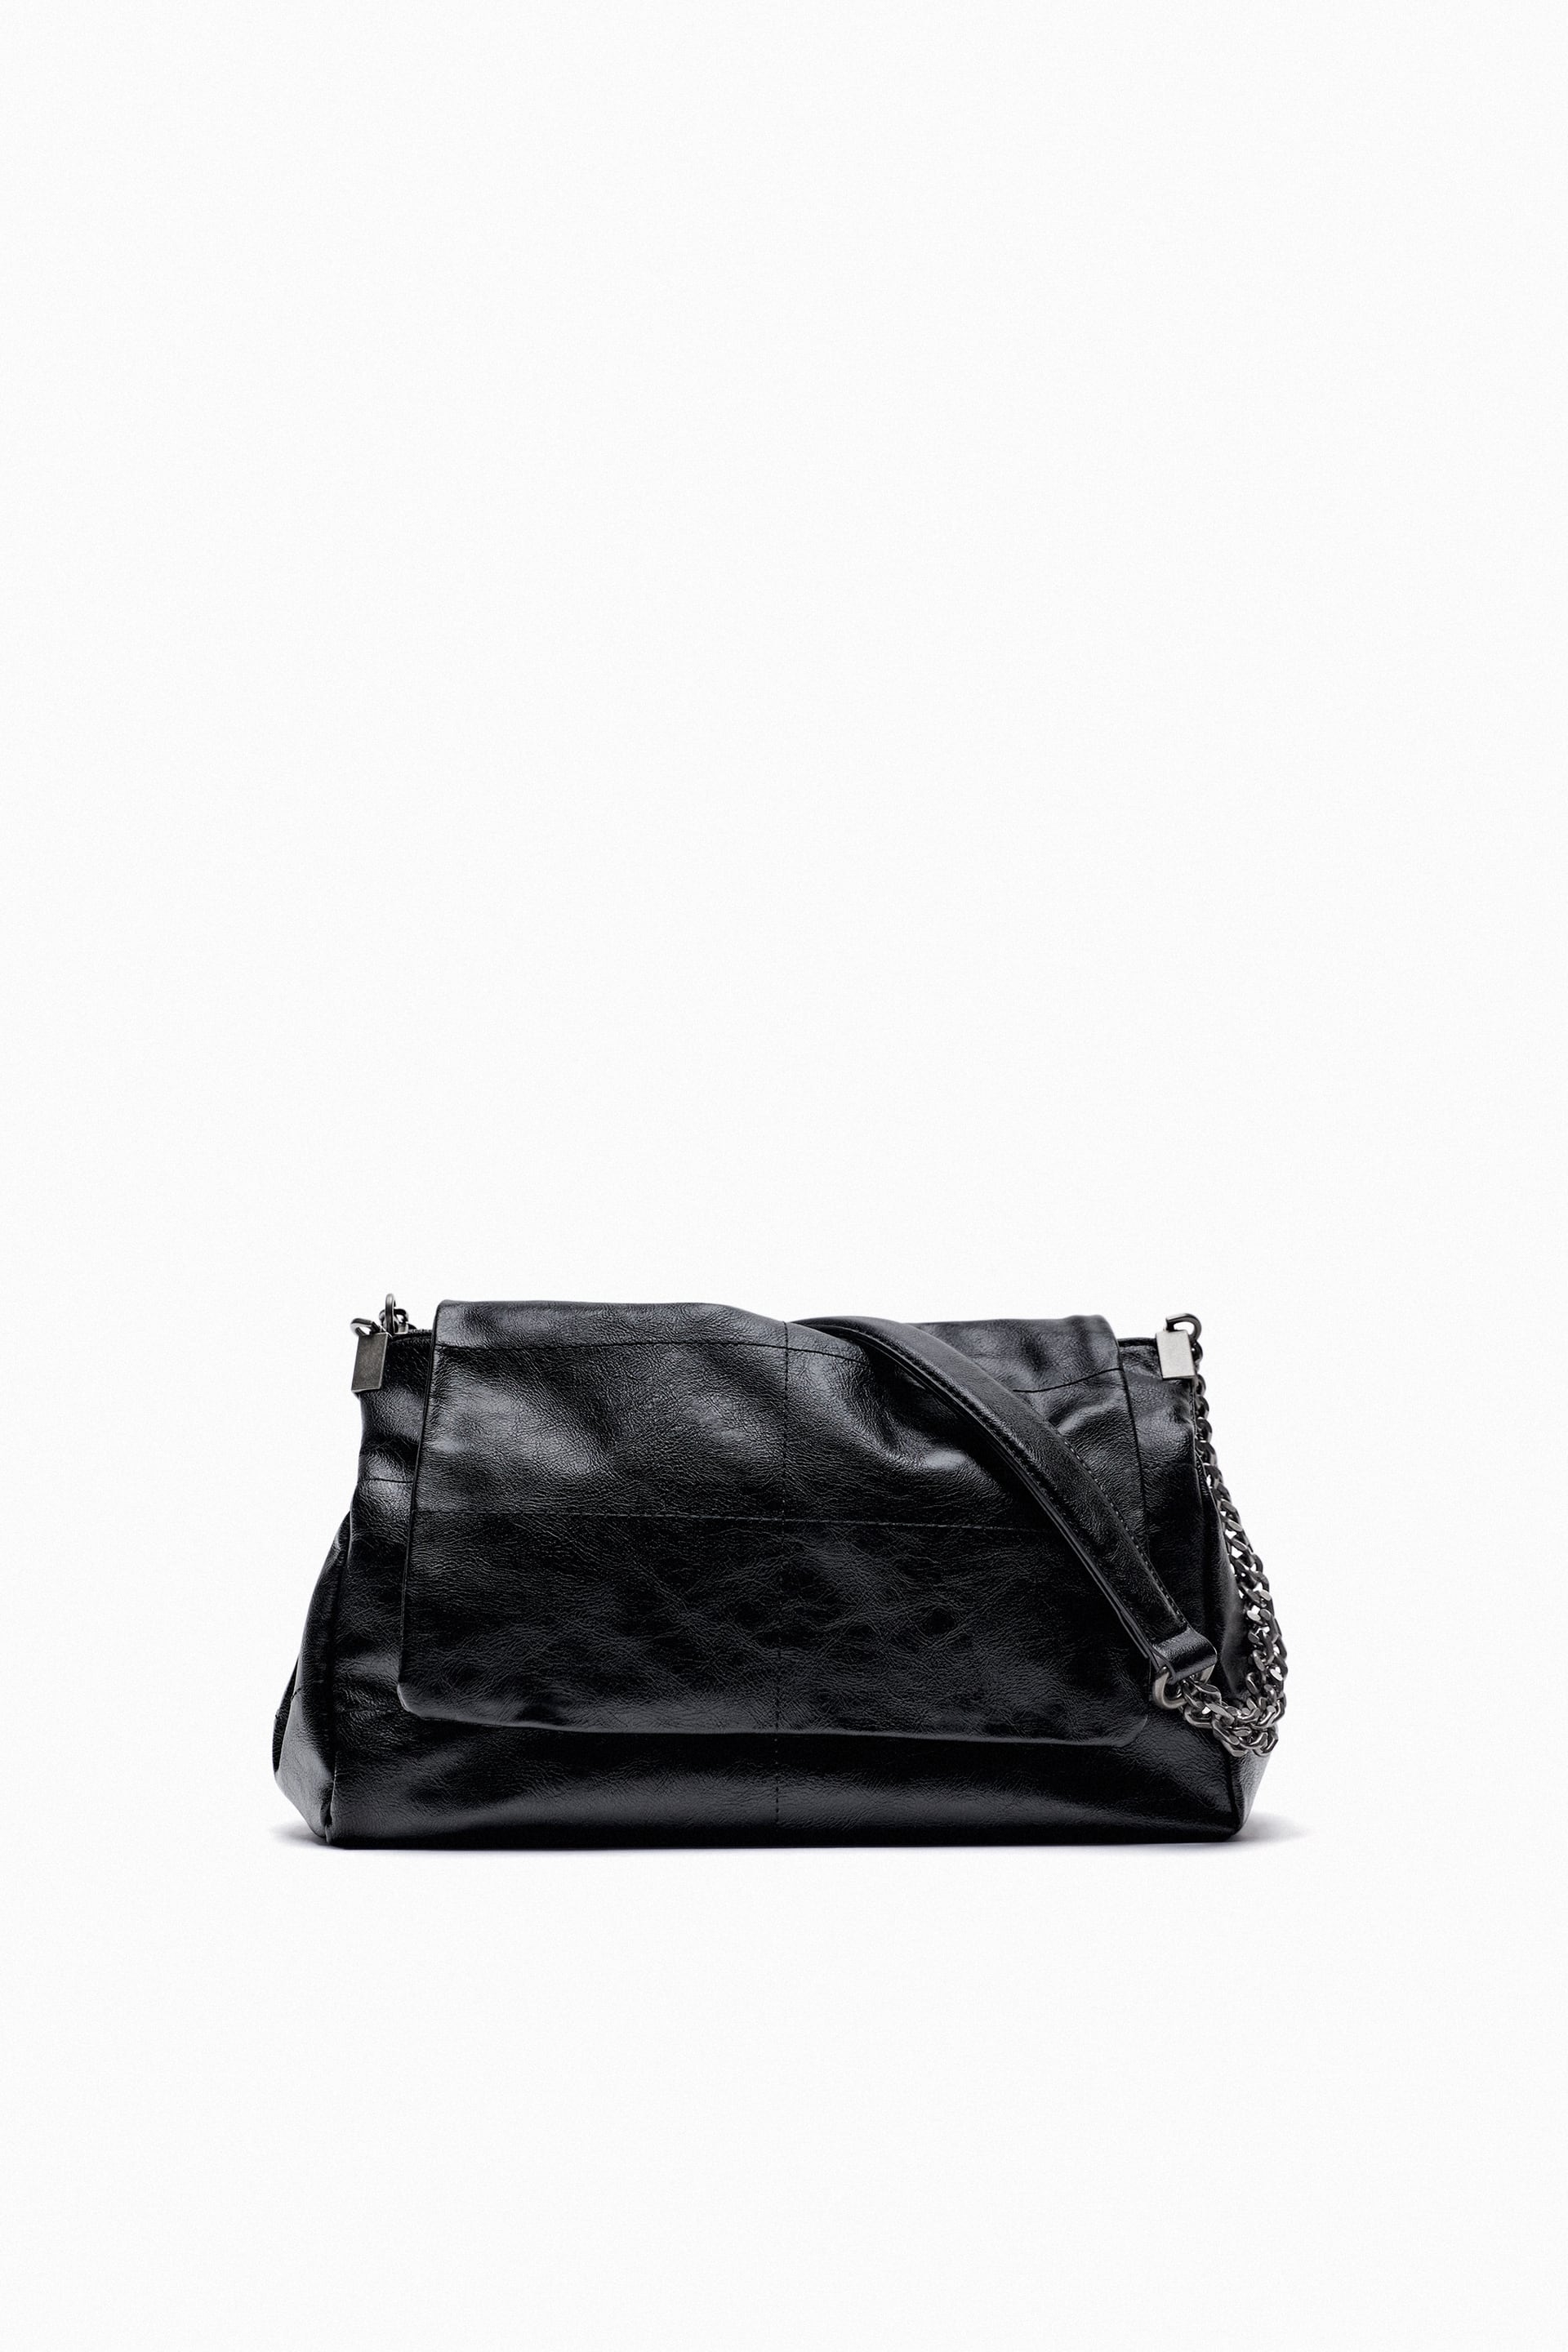 Zara, Bags, Zara Rock Style Flap Shoulder Bag Black